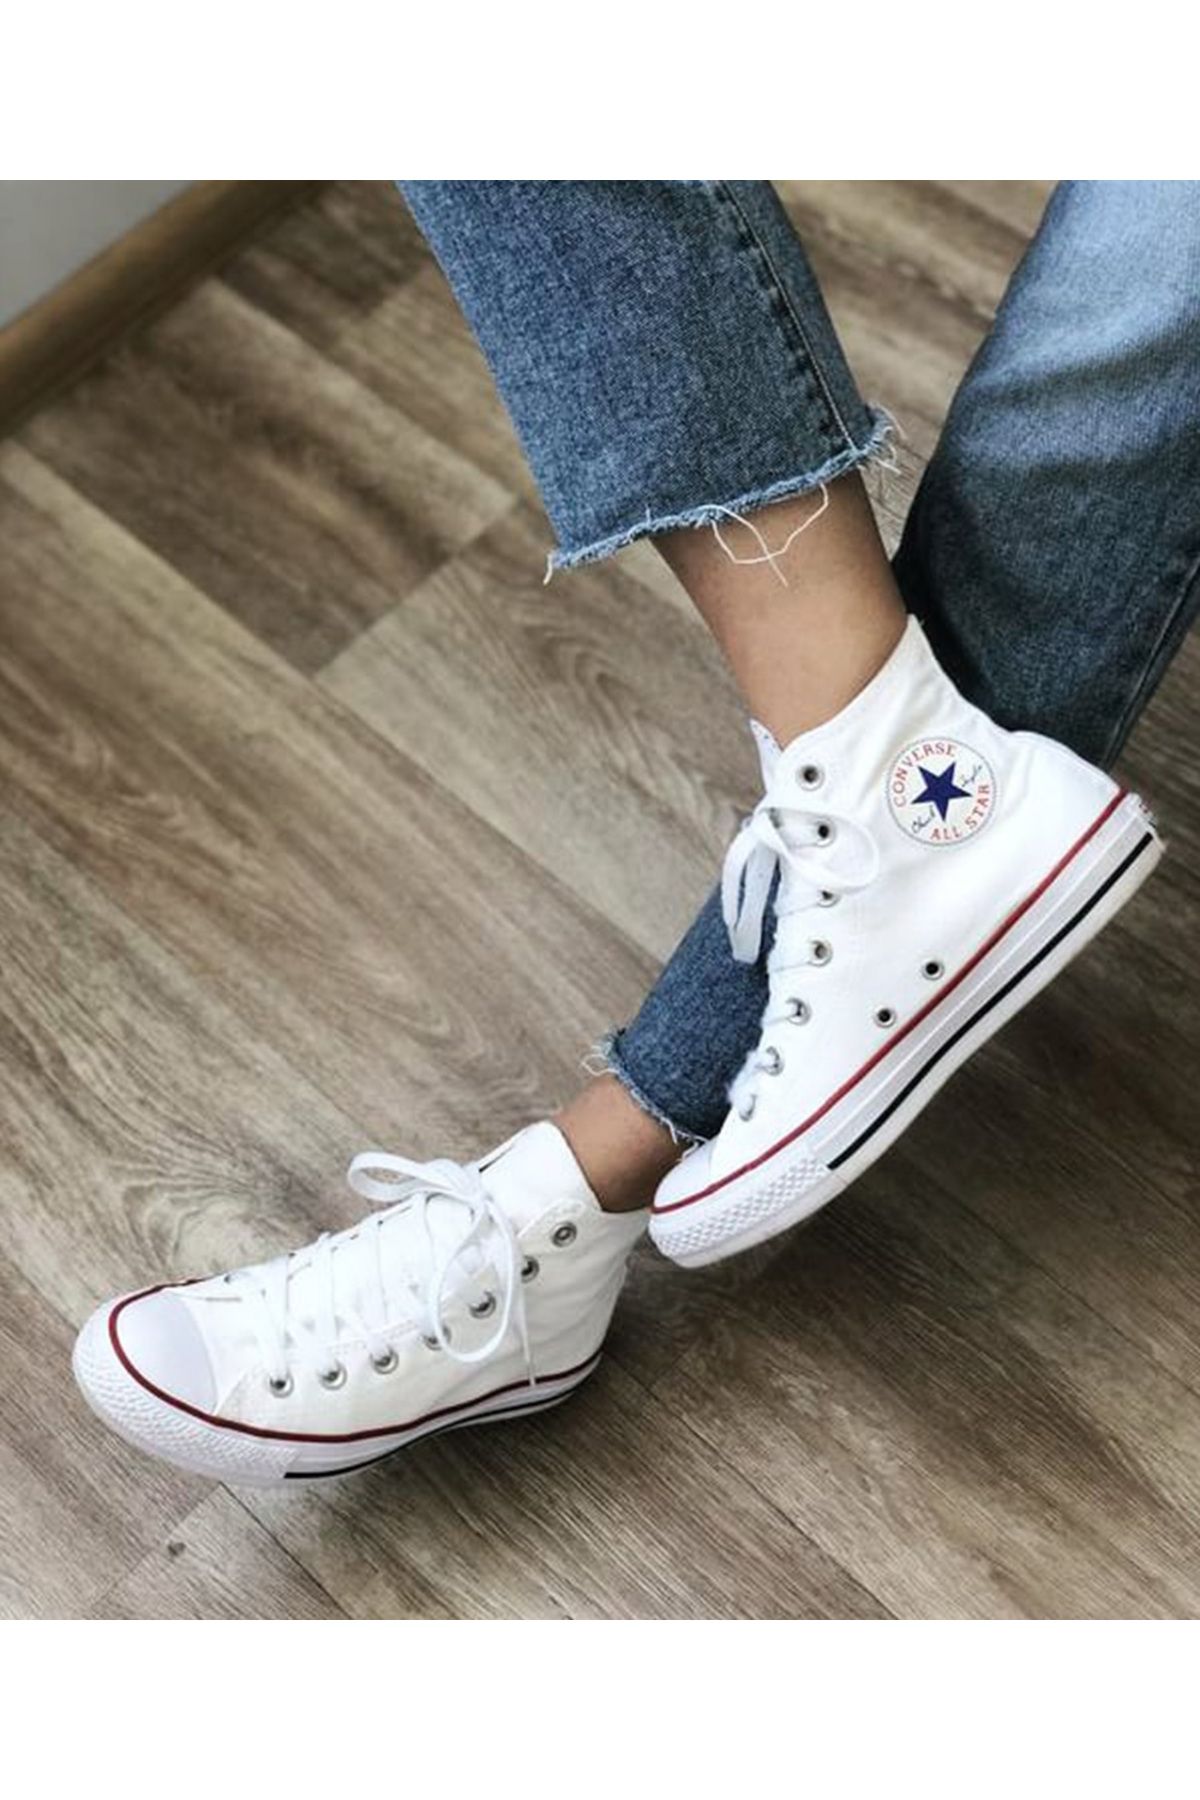 Converse Chuck Taylor All Star Ayakkabısı Sneaker Beyaz